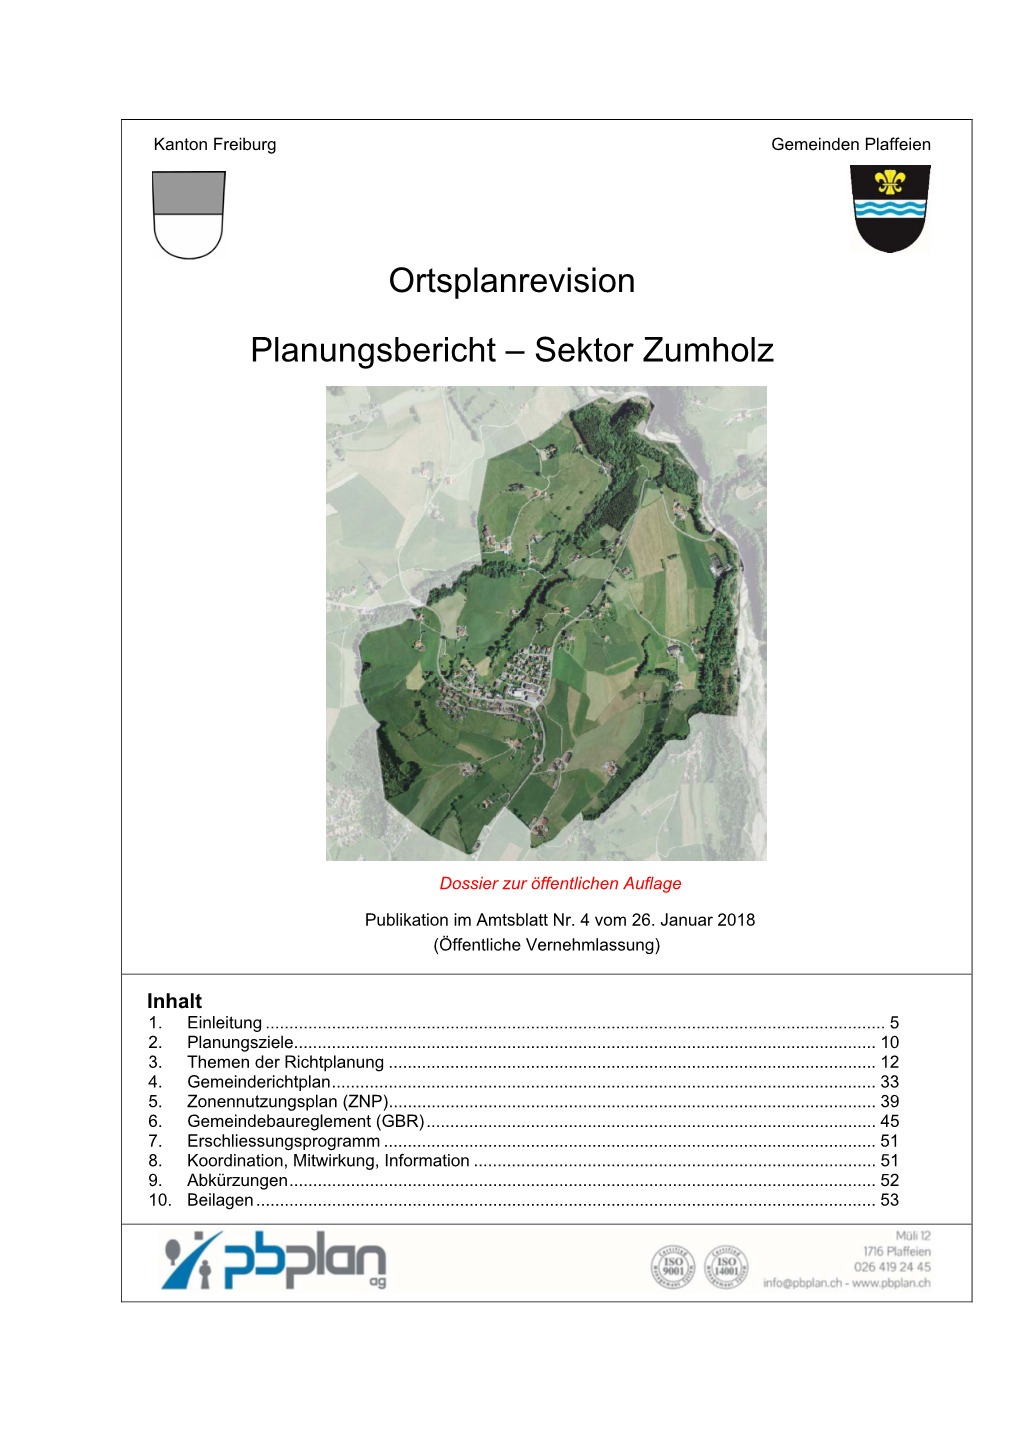 Ortsplanrevision Planungsbericht – Sektor Zumholz